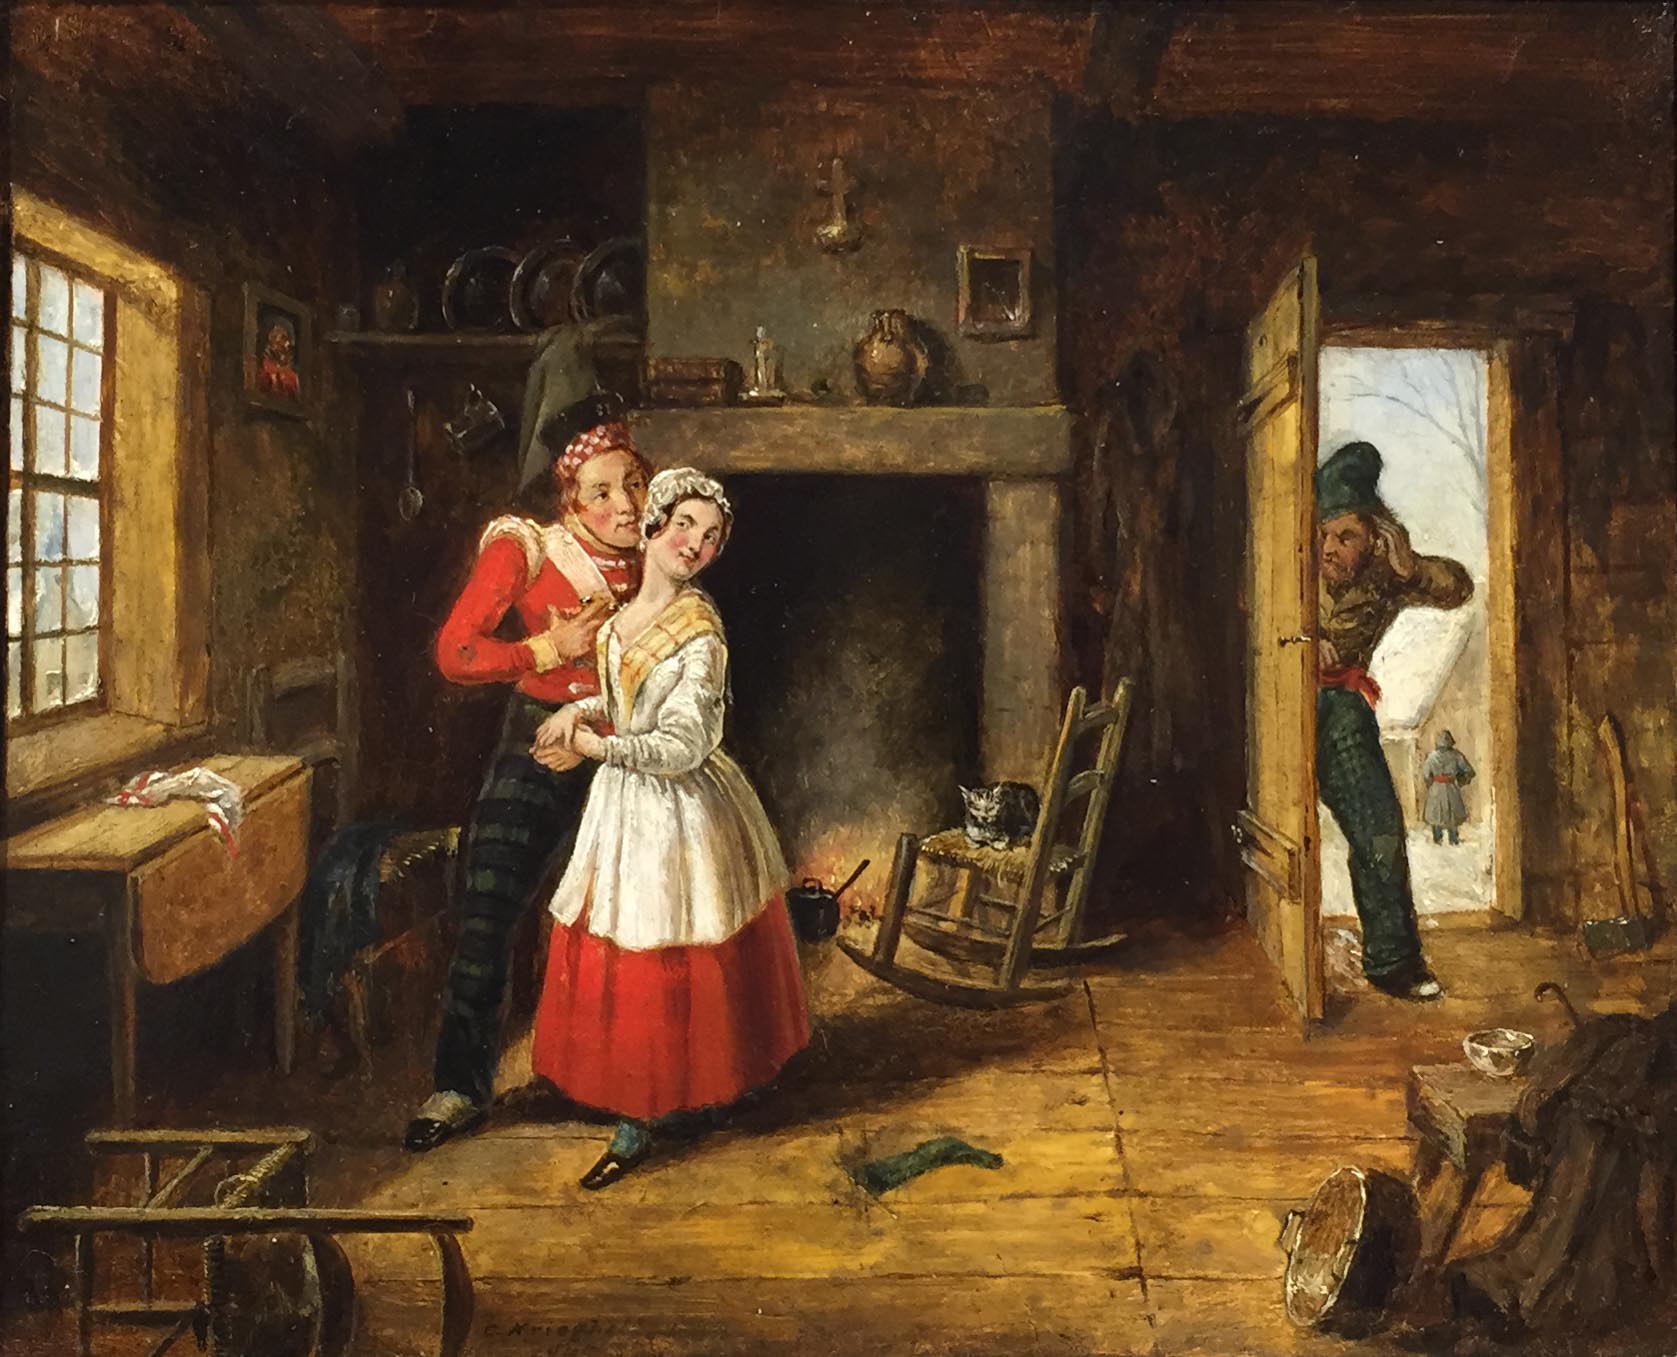 Cornelius Krieghoff (1815- 1872),  “The Jealous Husband”, 1845